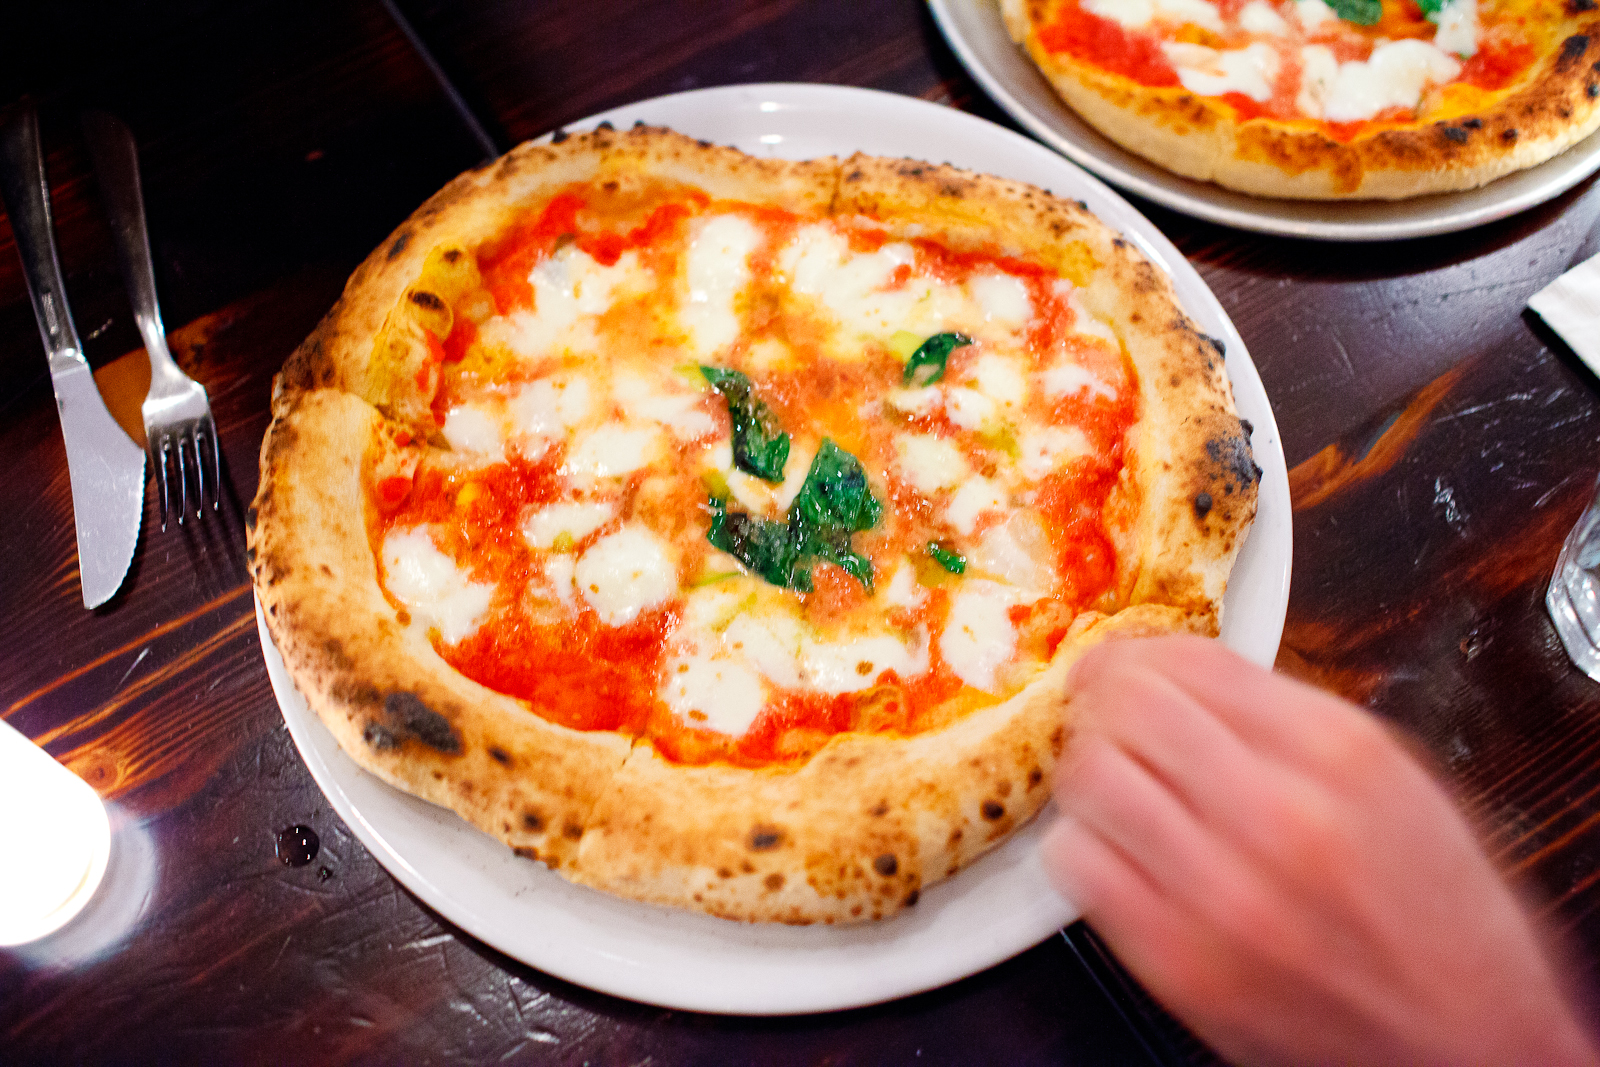 Pizza rossa - Margherita (tomato sauce, homemade mozzarella, basil) ($11)